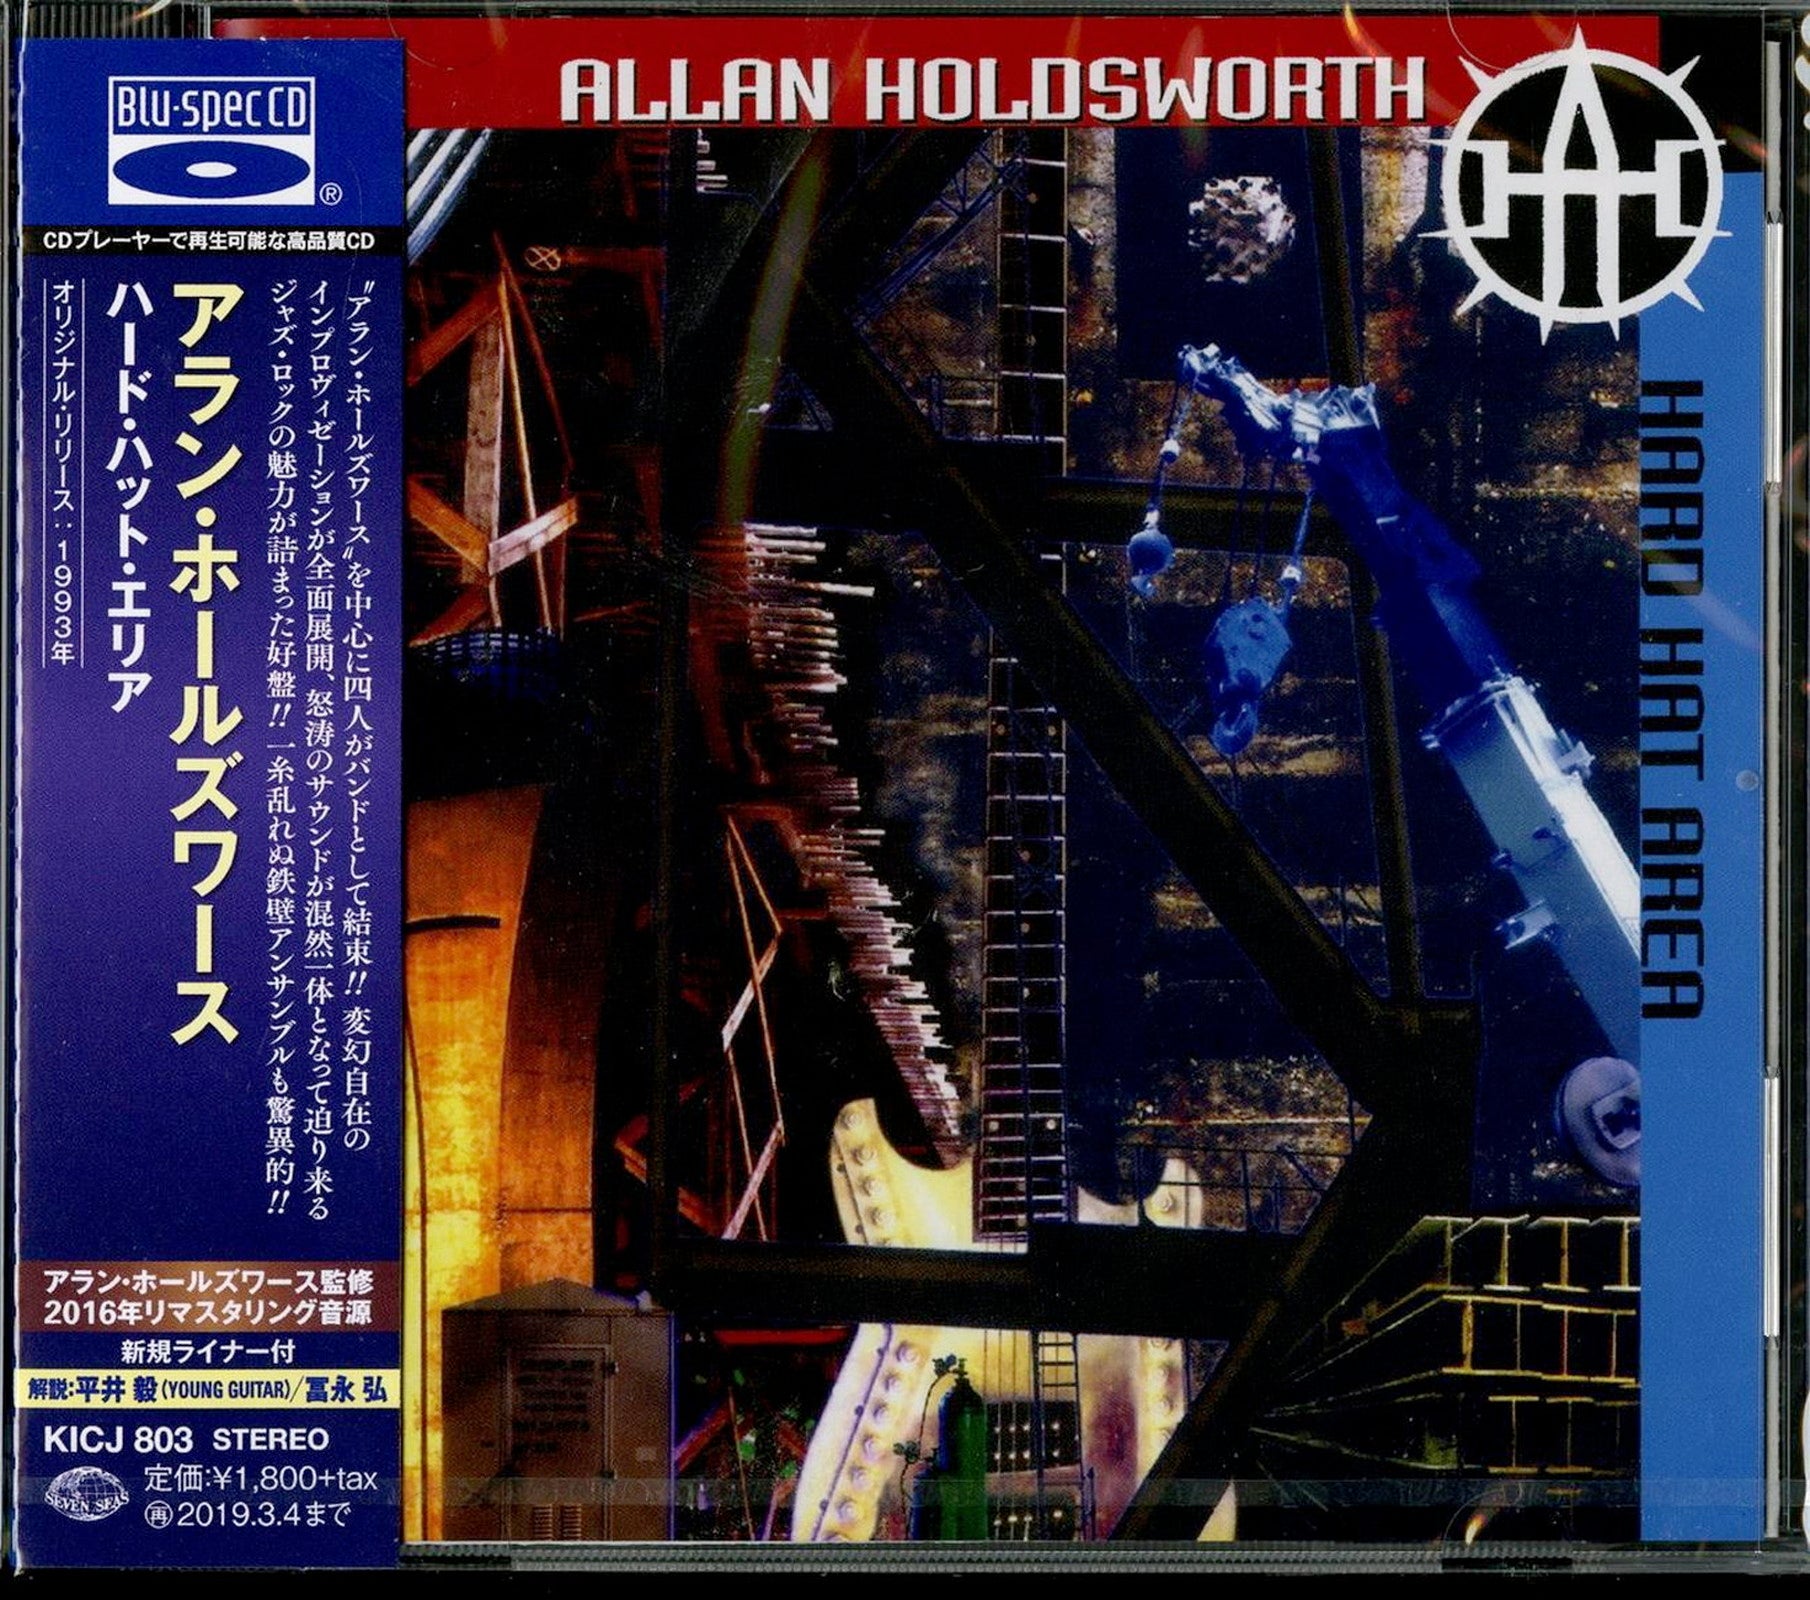 Allan Holdsworth - Hard Hat Area - Blu-spec – CDs Vinyl Japan Store